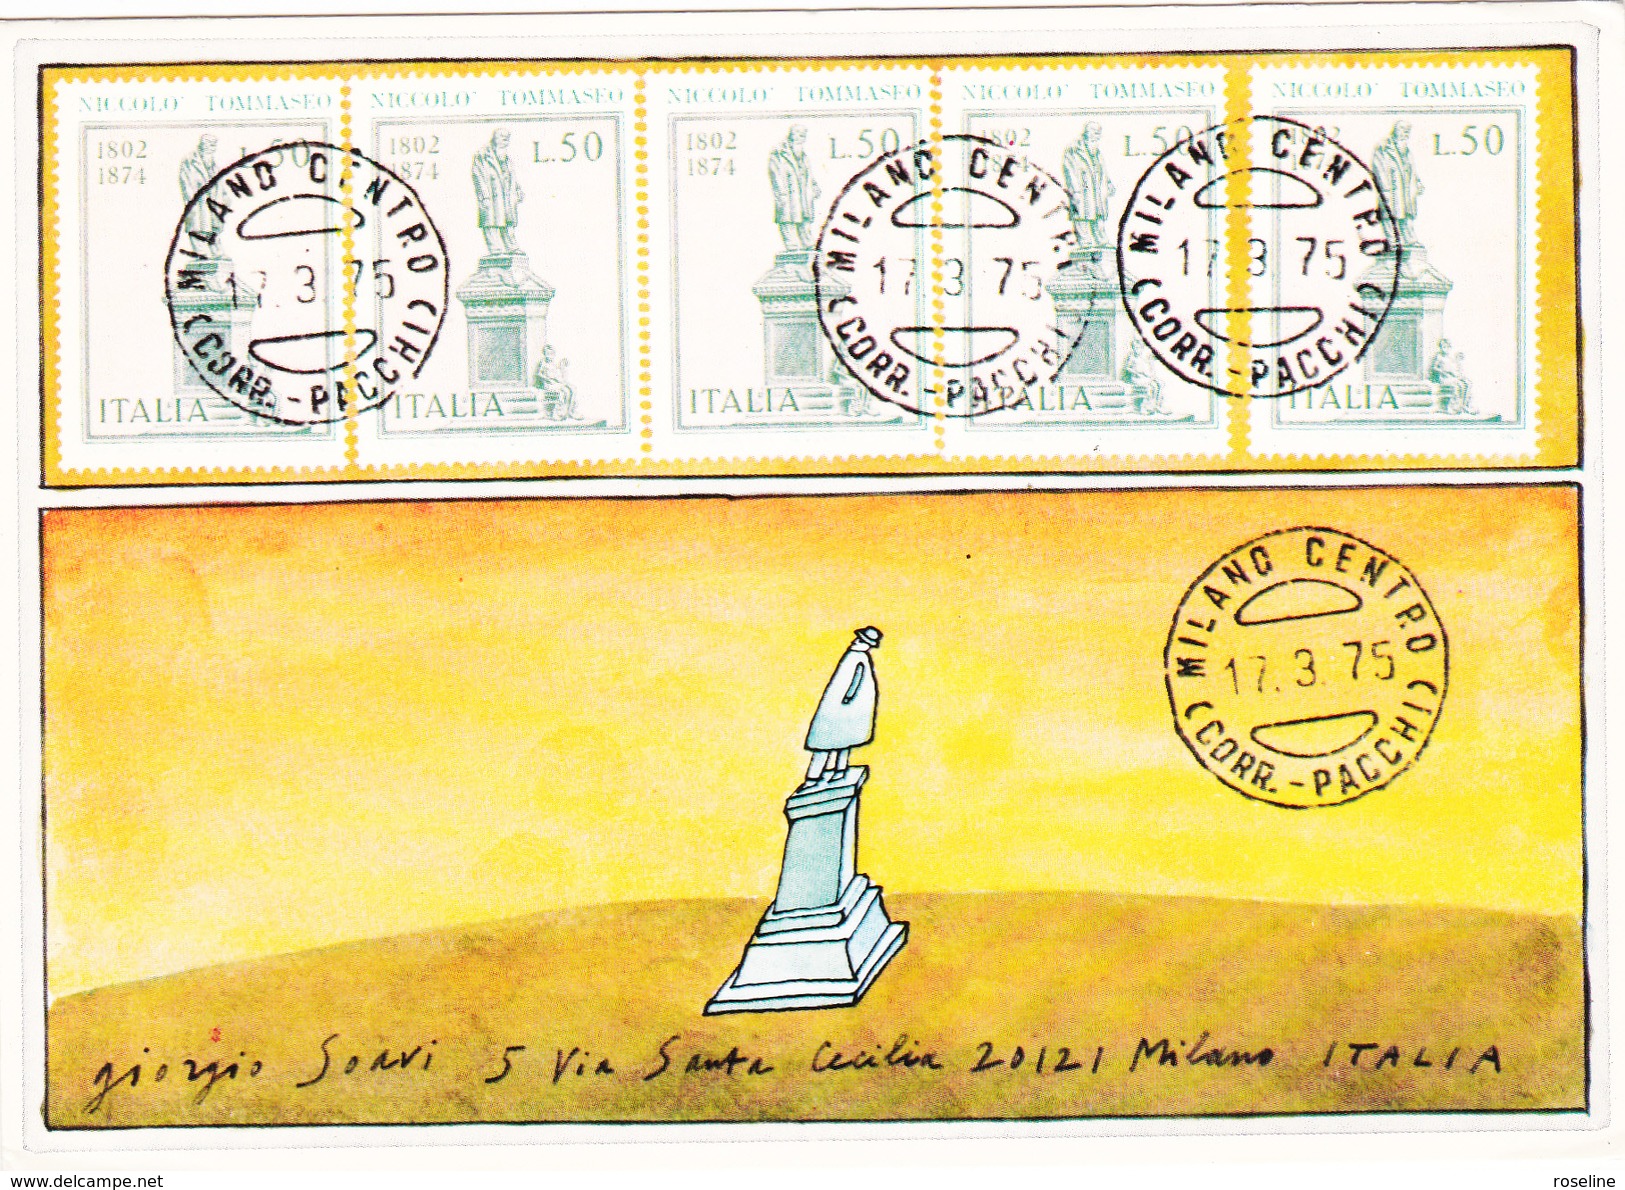 FOLON  Ed Alice  -  Enveloppe Pour Giorgio Soavi  17 Mars 1975  - CPM  10,5x15  BE  Neuve - Folon